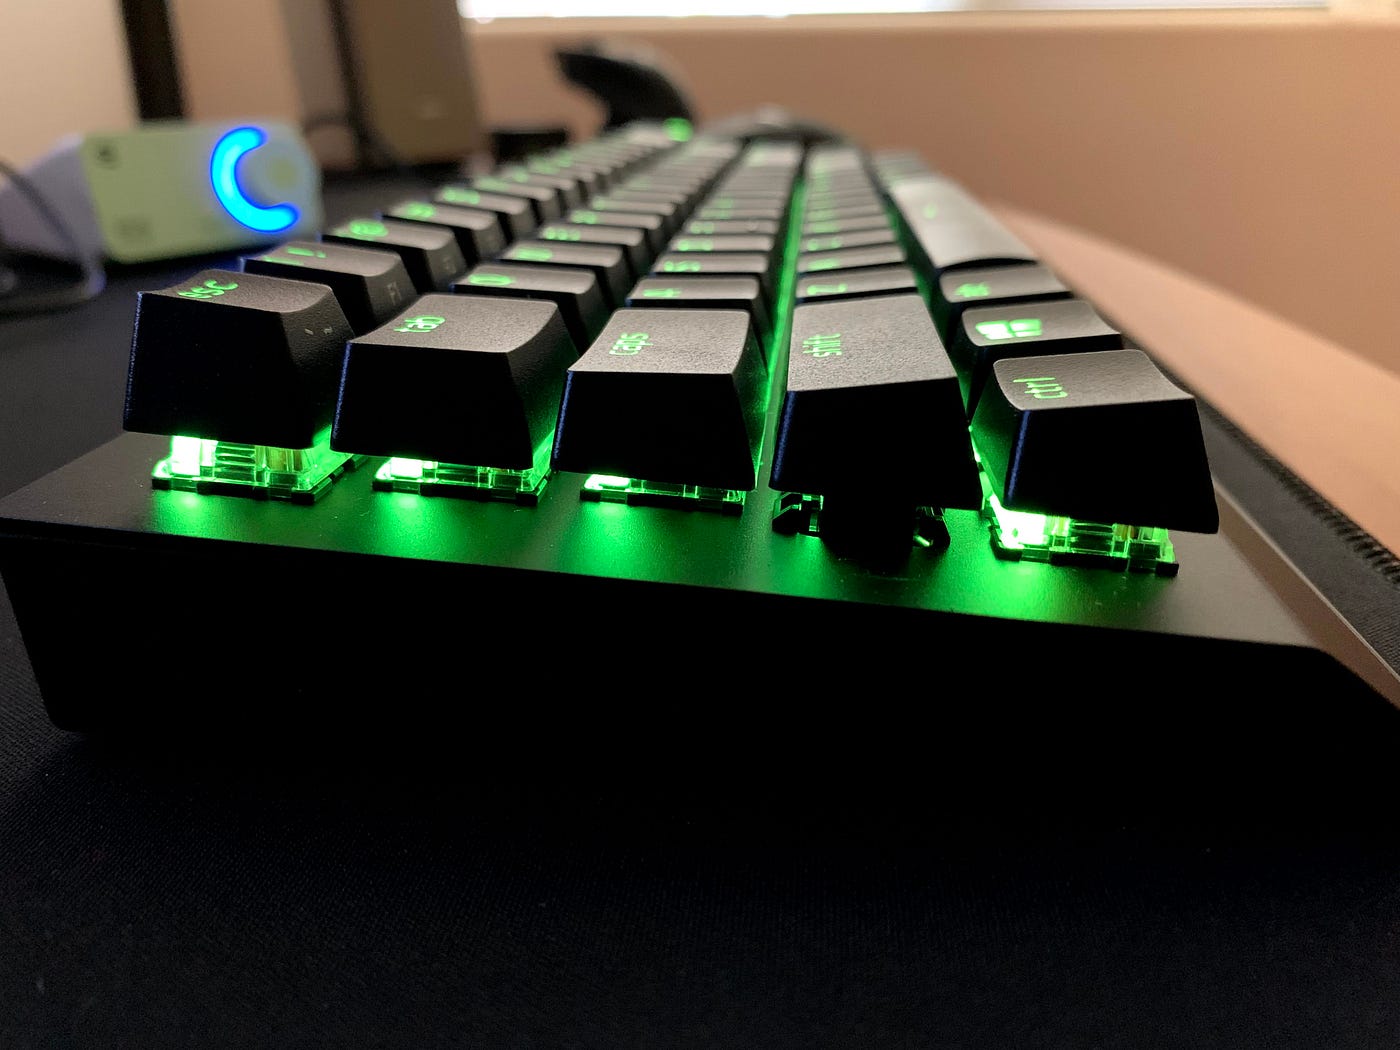 Razer BlackWidow V3 Pro Wireless Mechanical Gaming Keyboard Review